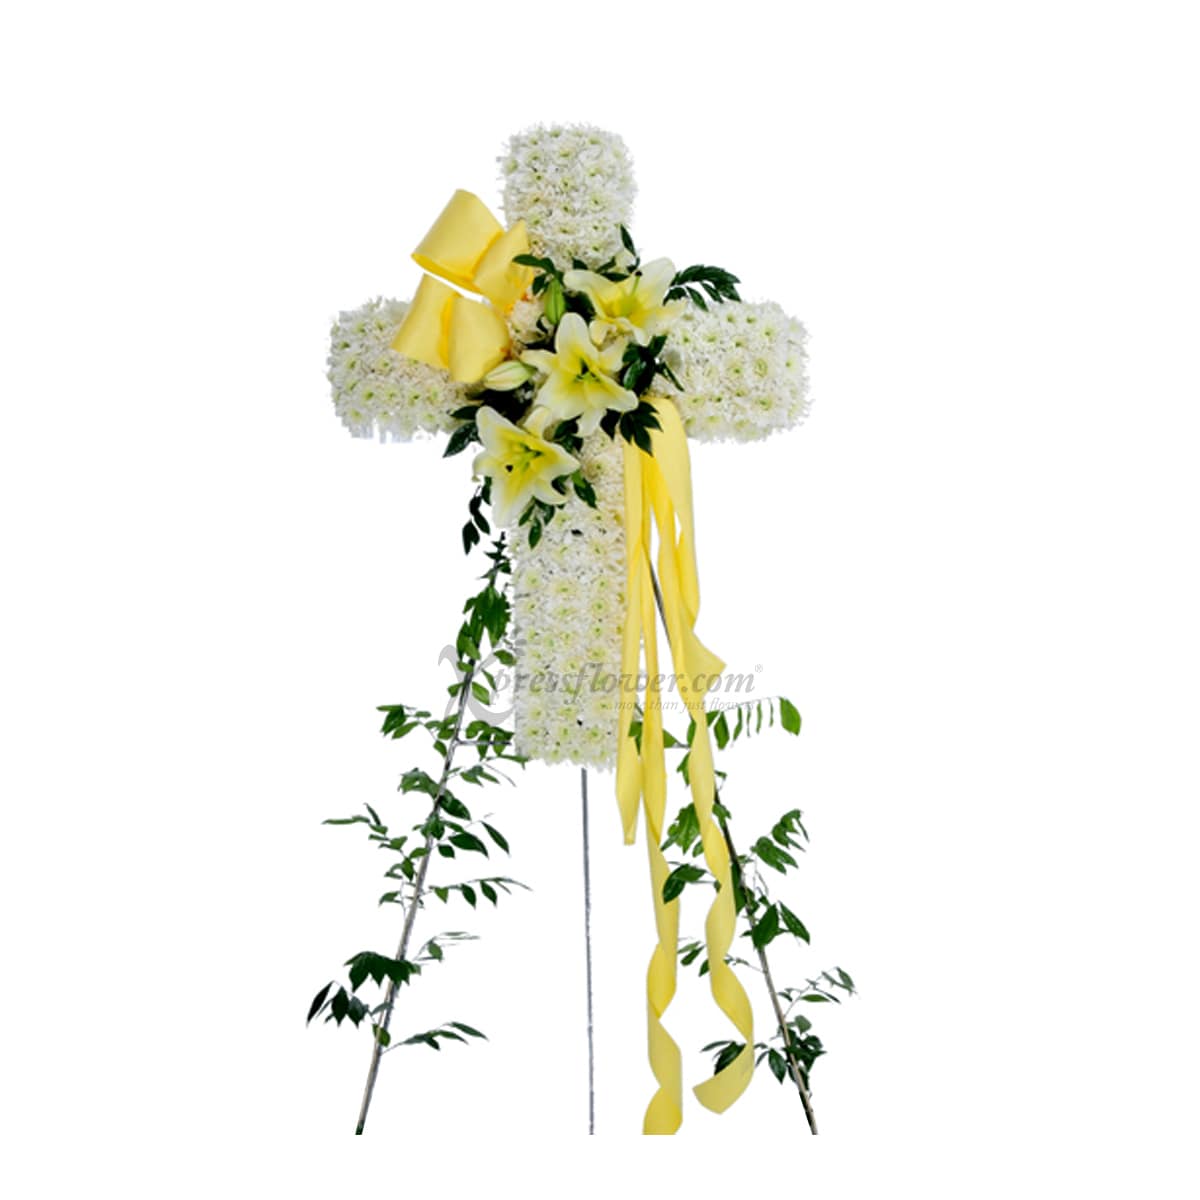 Beautiful Tribute (Funeral Condolence Flower Wreath)